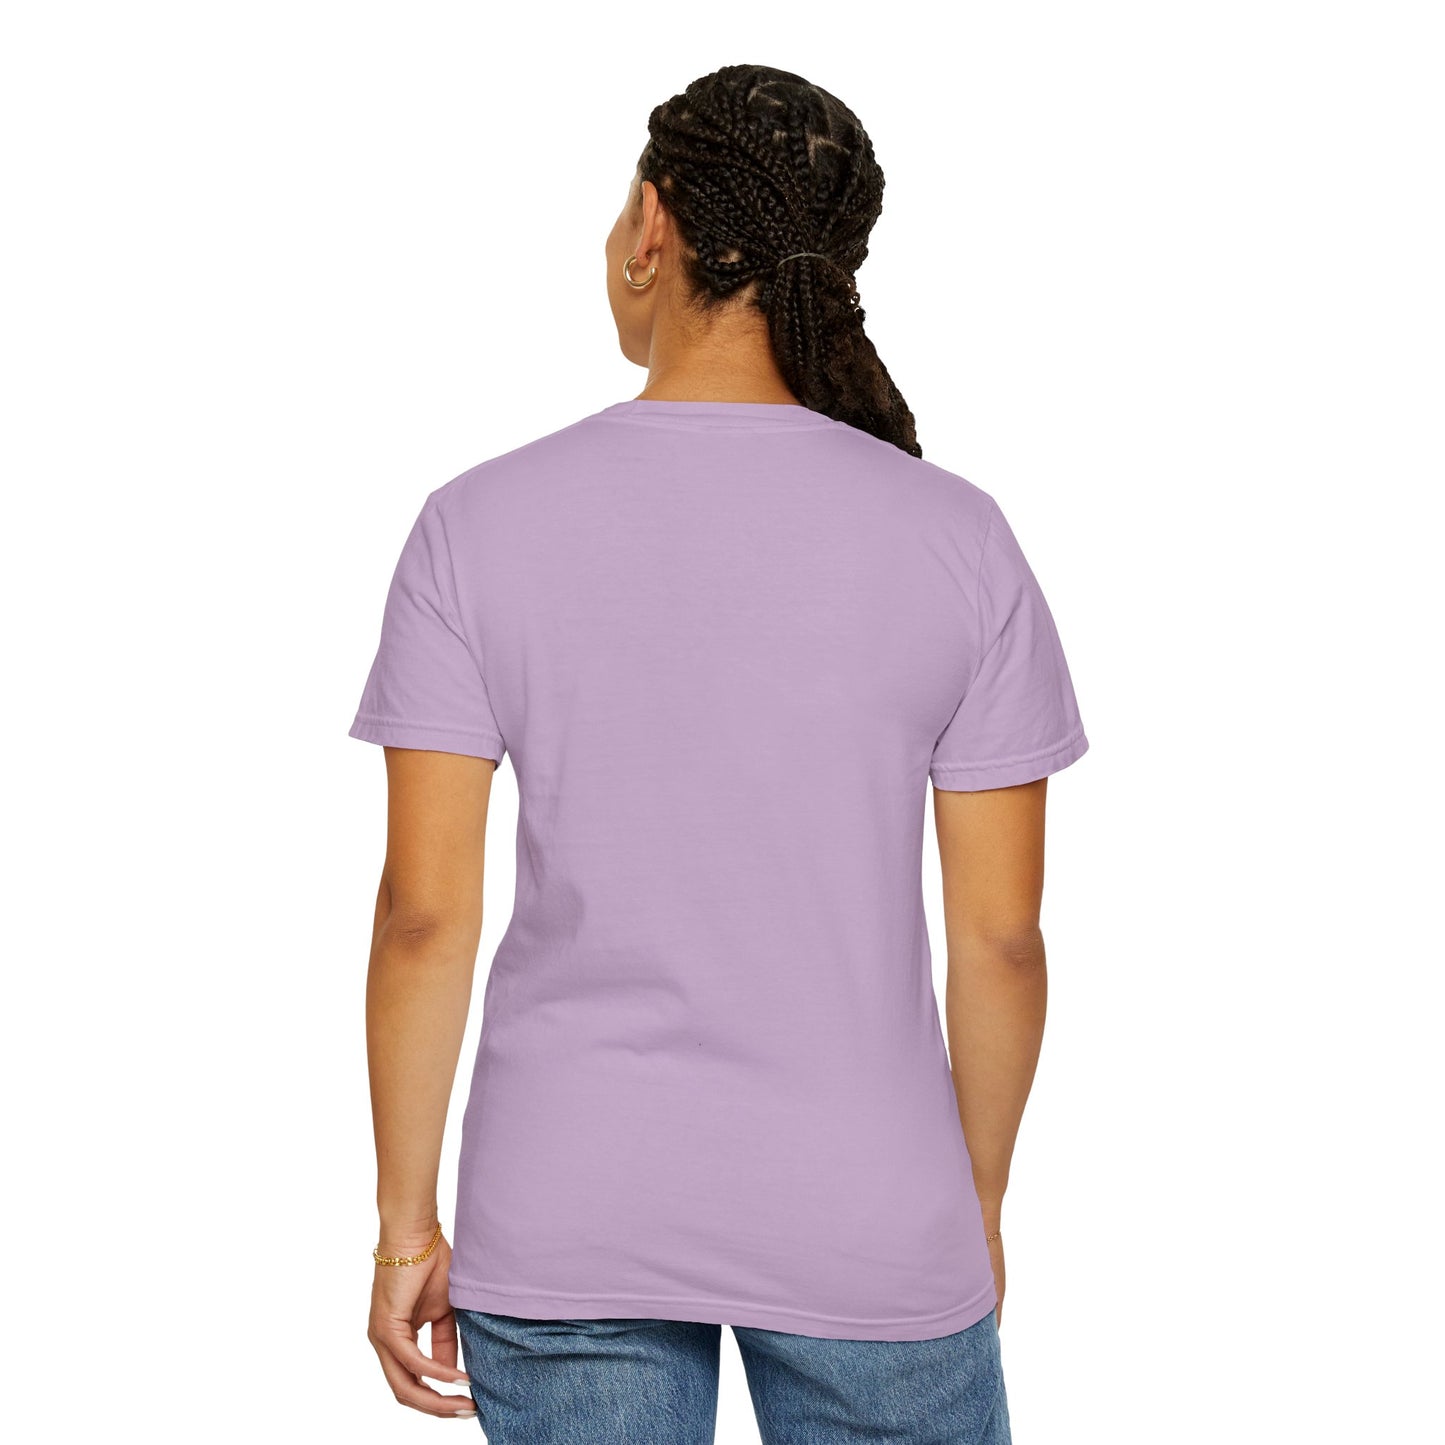 January Birth Flower "Carnation" - Unisex Garment-Dyed T-shirt